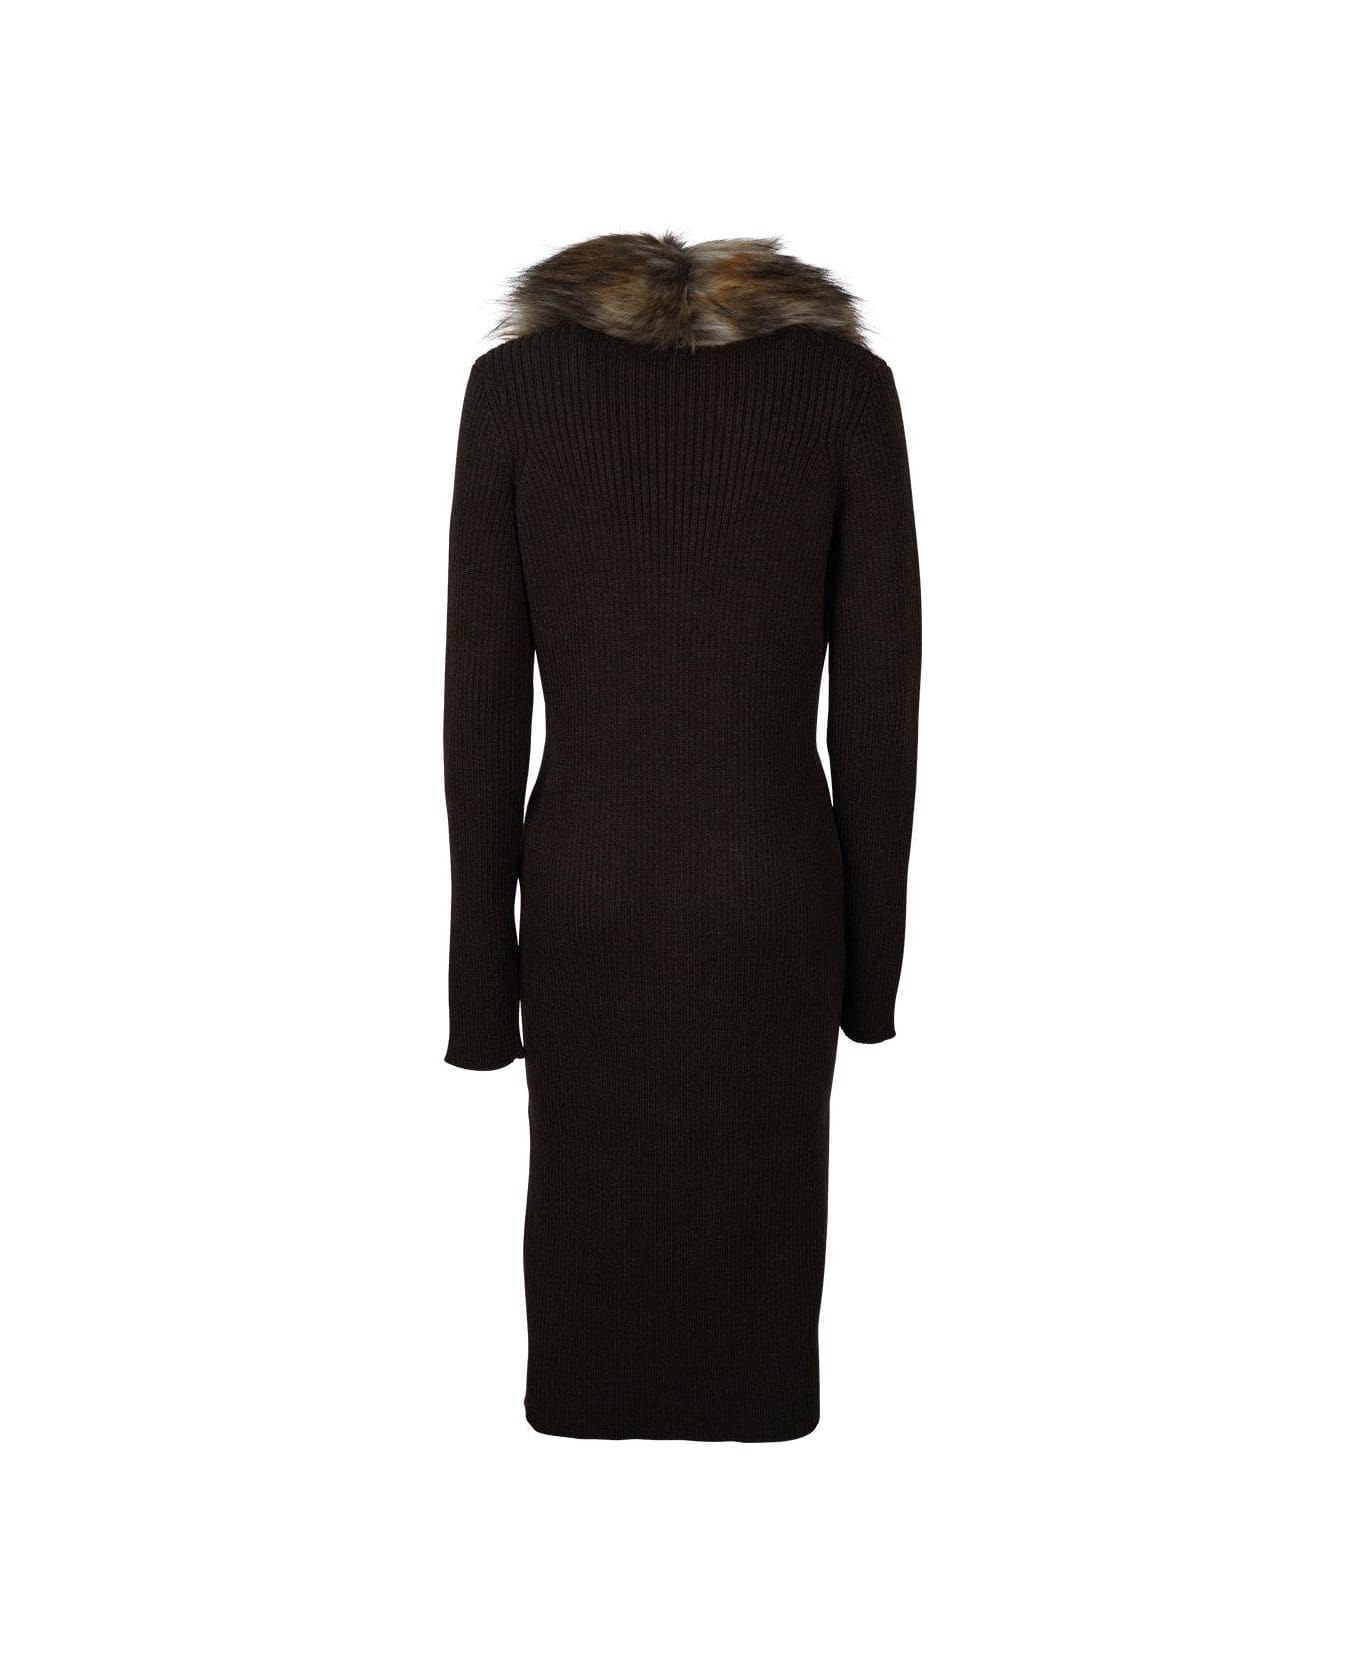 Saint Laurent Long-sleeved Cardigan Dress - BROWN